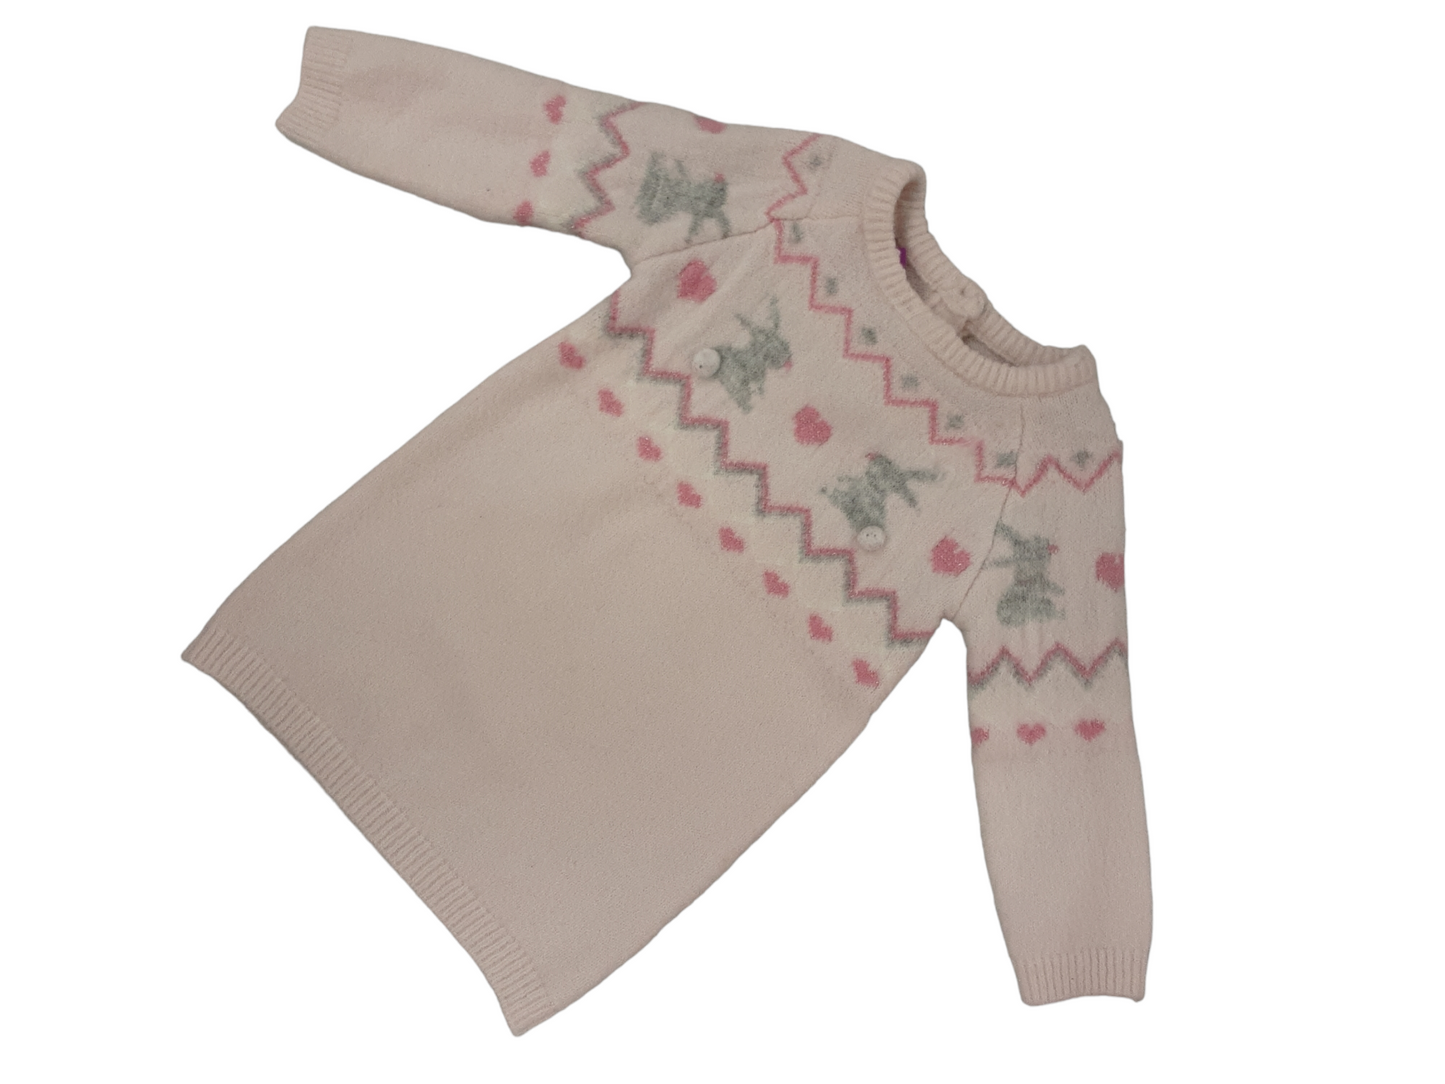 Fleecy soft sweater dress size 18-24 months